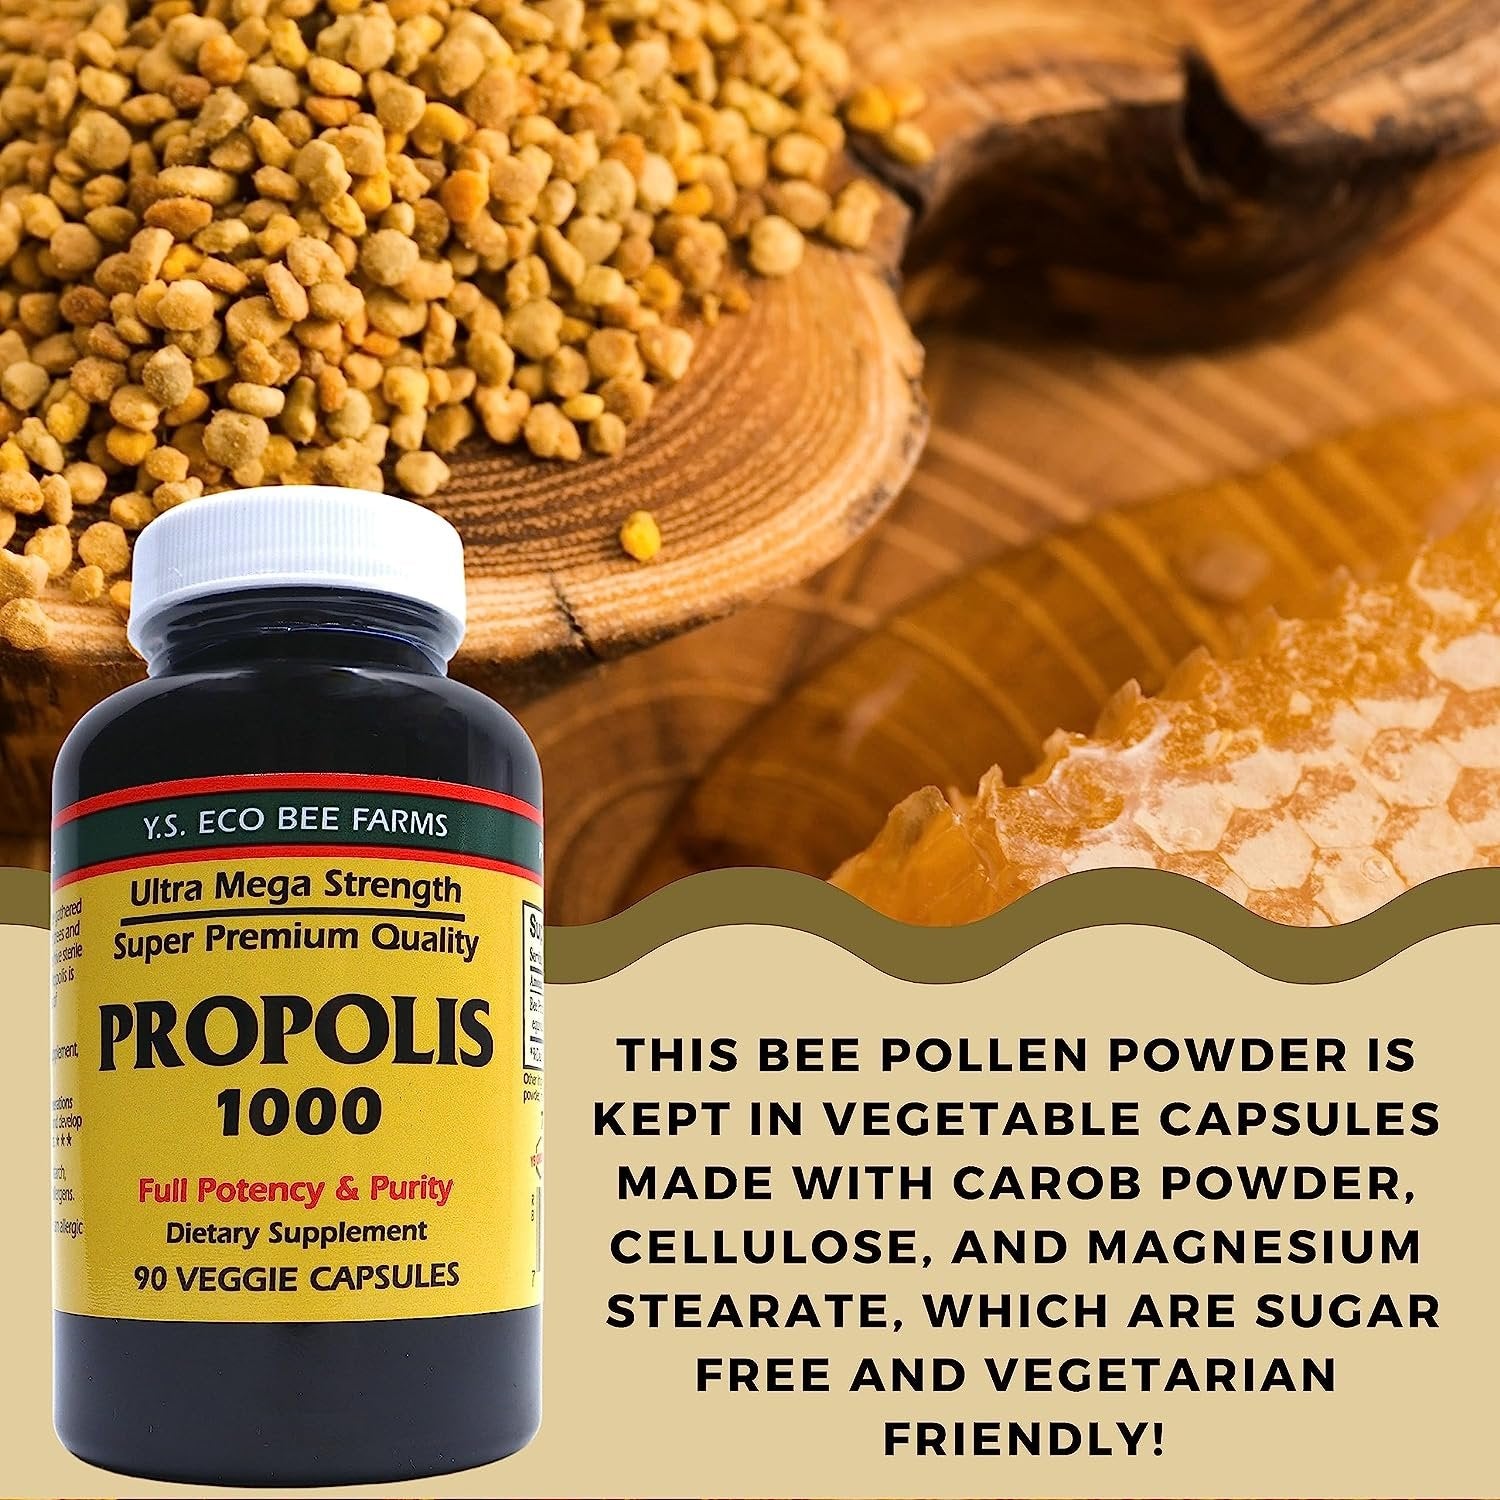 Y.S. Organic Bee Farms Propolis-Raw Unprocessed 1000mg - Your Gateway to Wellness - 90 Capsules with Bonus worldwidenutrition Multi Purpose Key Chain